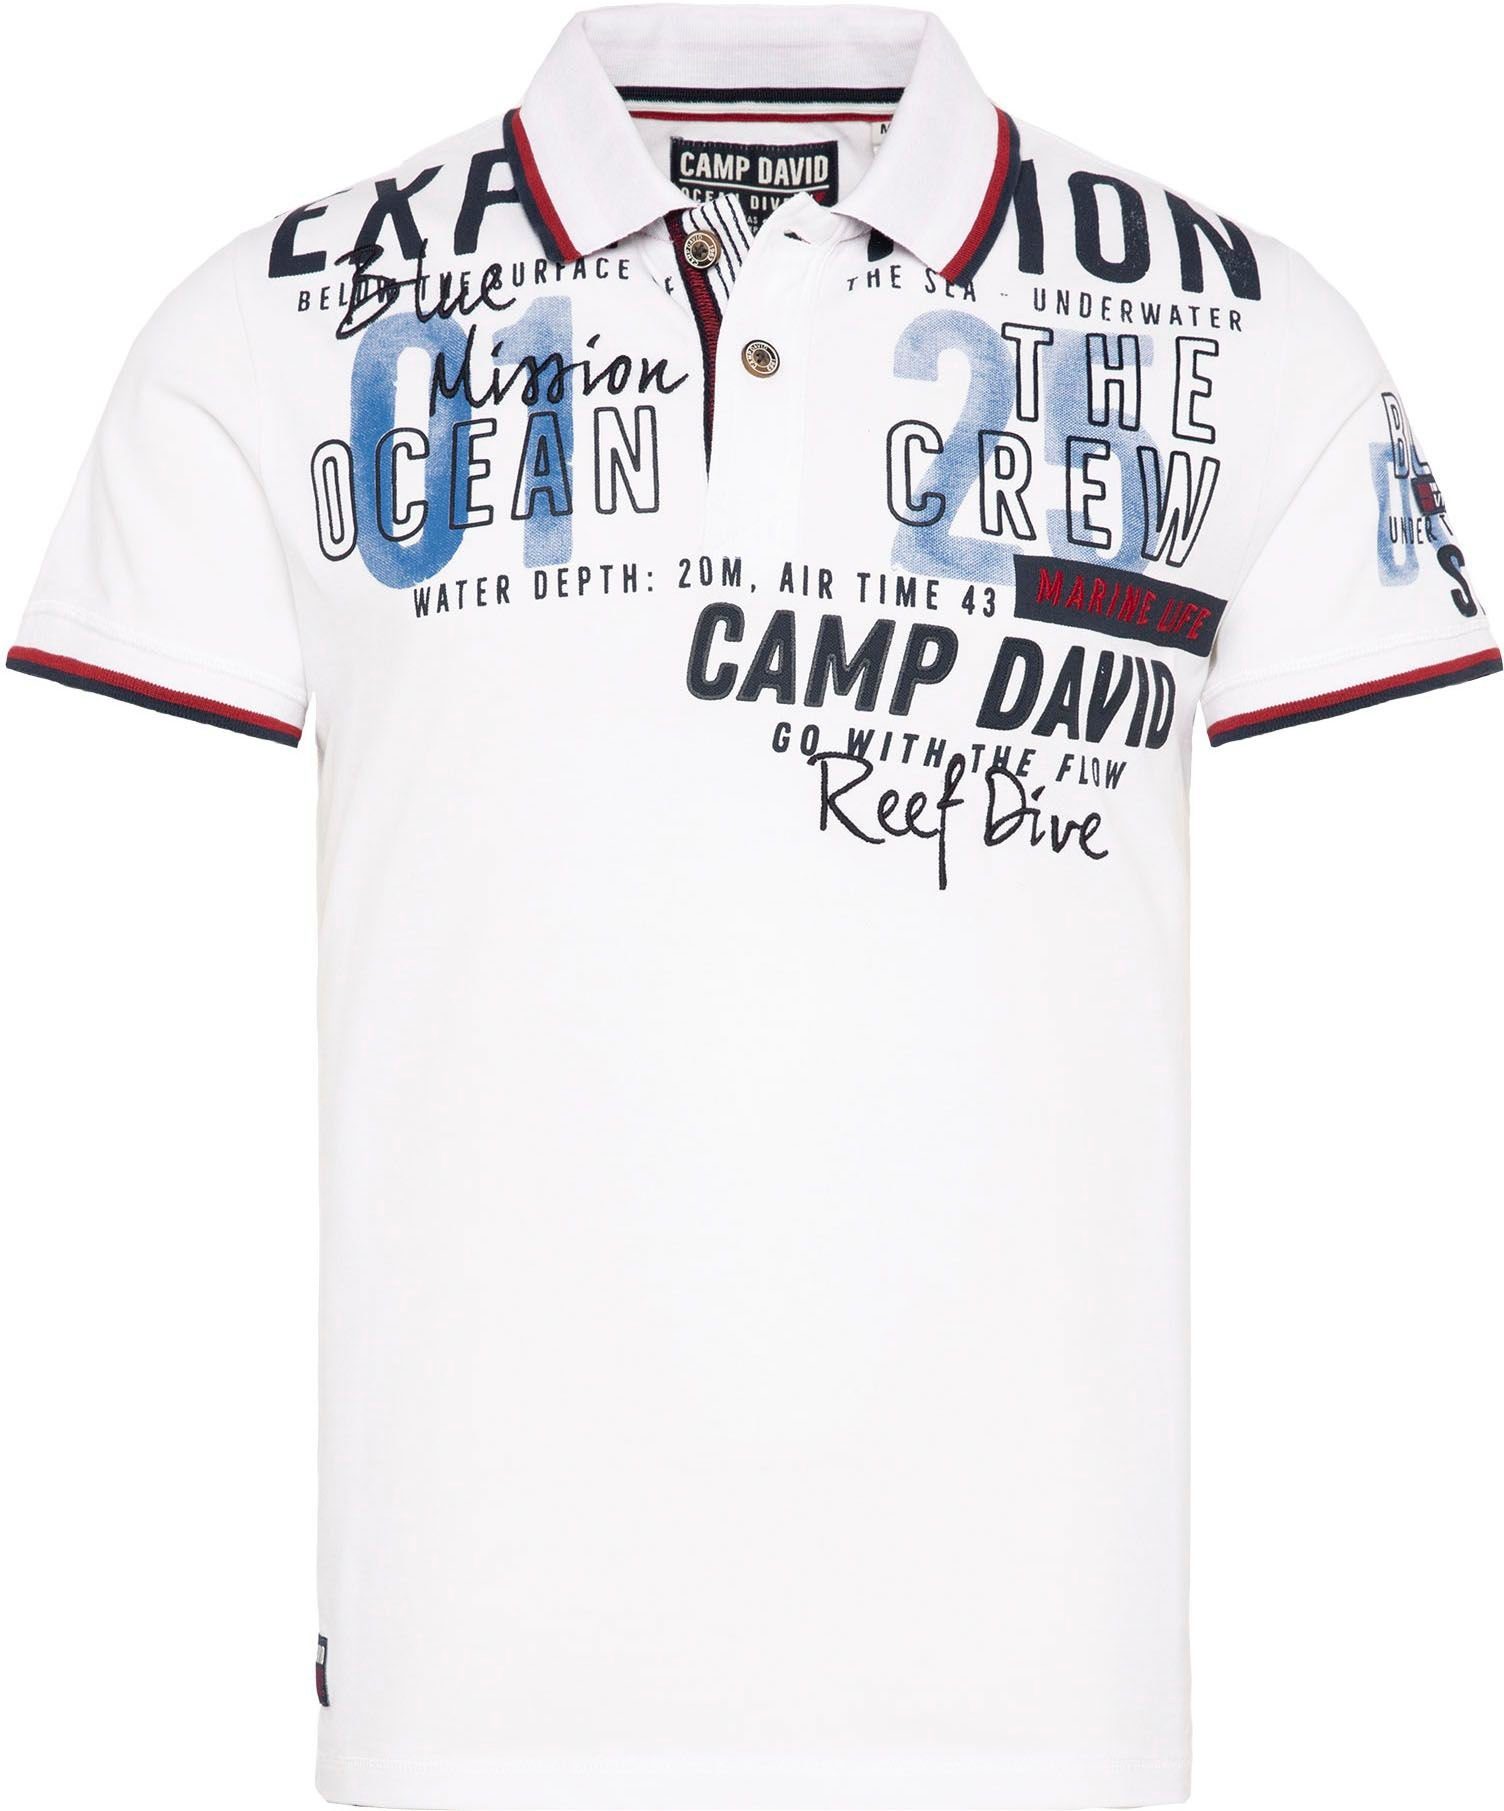 Poloshirt CAMP DAVID opticwhite Logoprägung mit